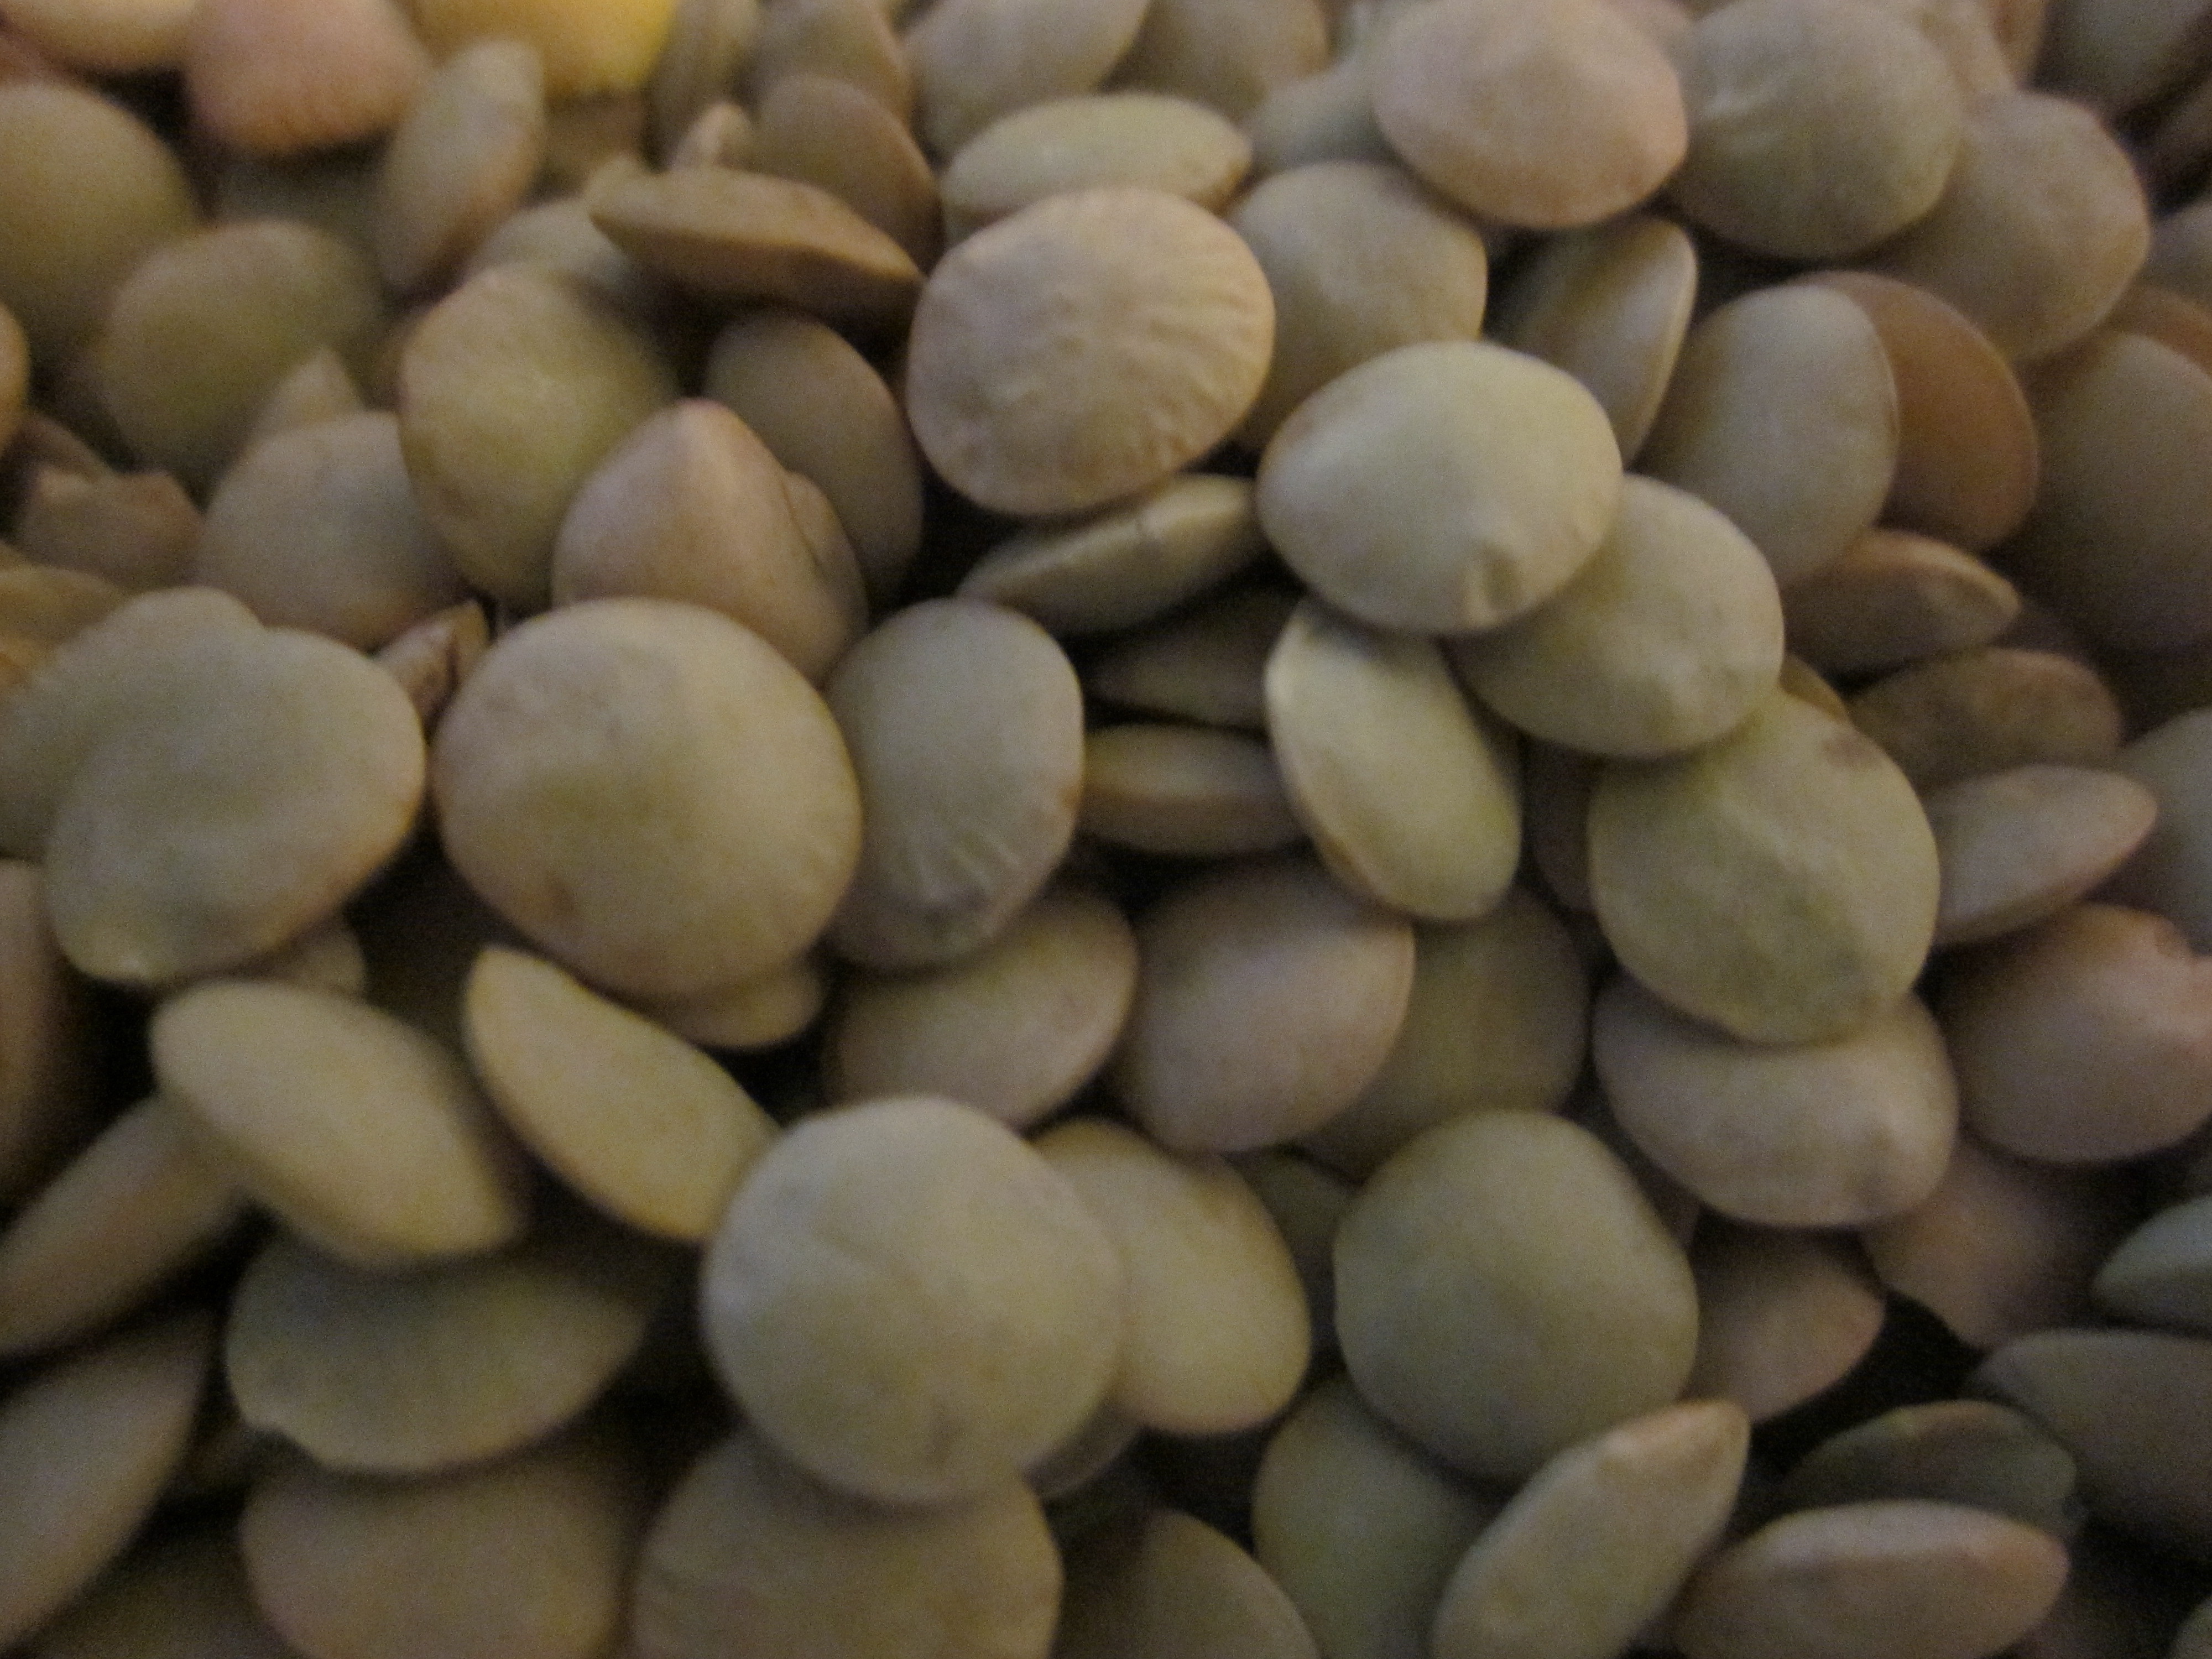 2013-10-08-lentils.jpg